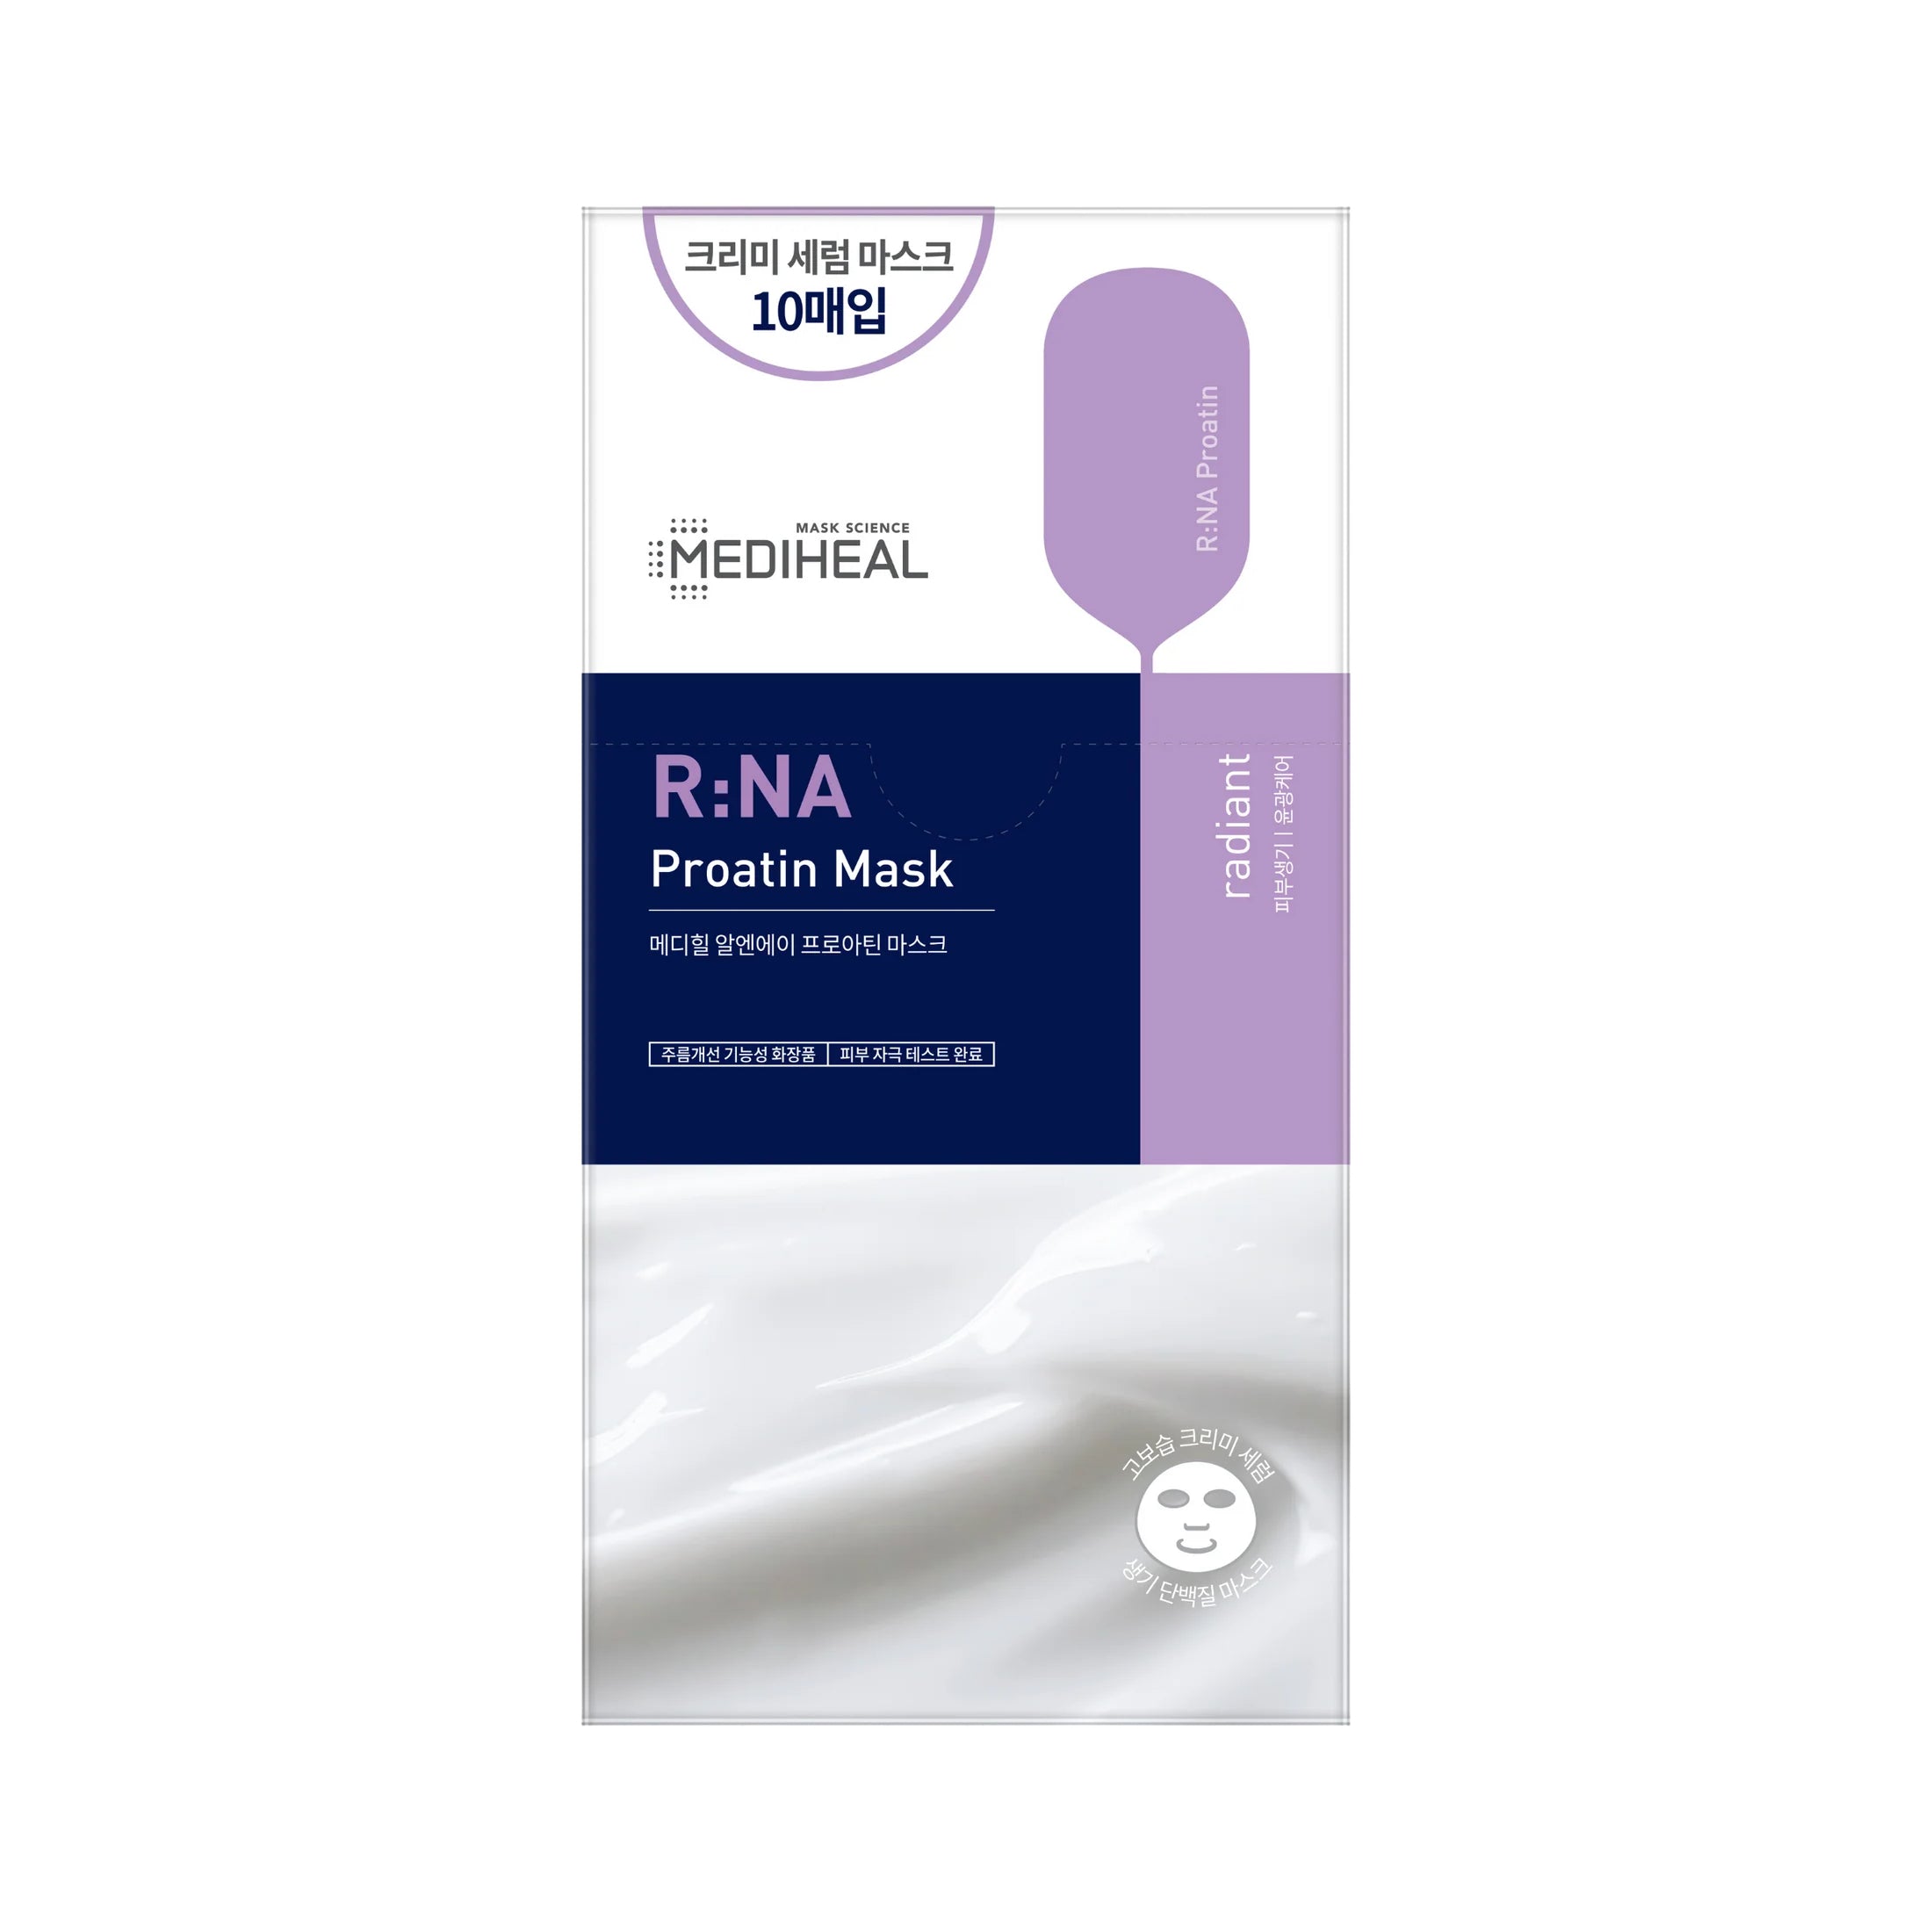 Mediheal R:NA Proatin Mask Beauty Mediheal Box (10 Sheets)  